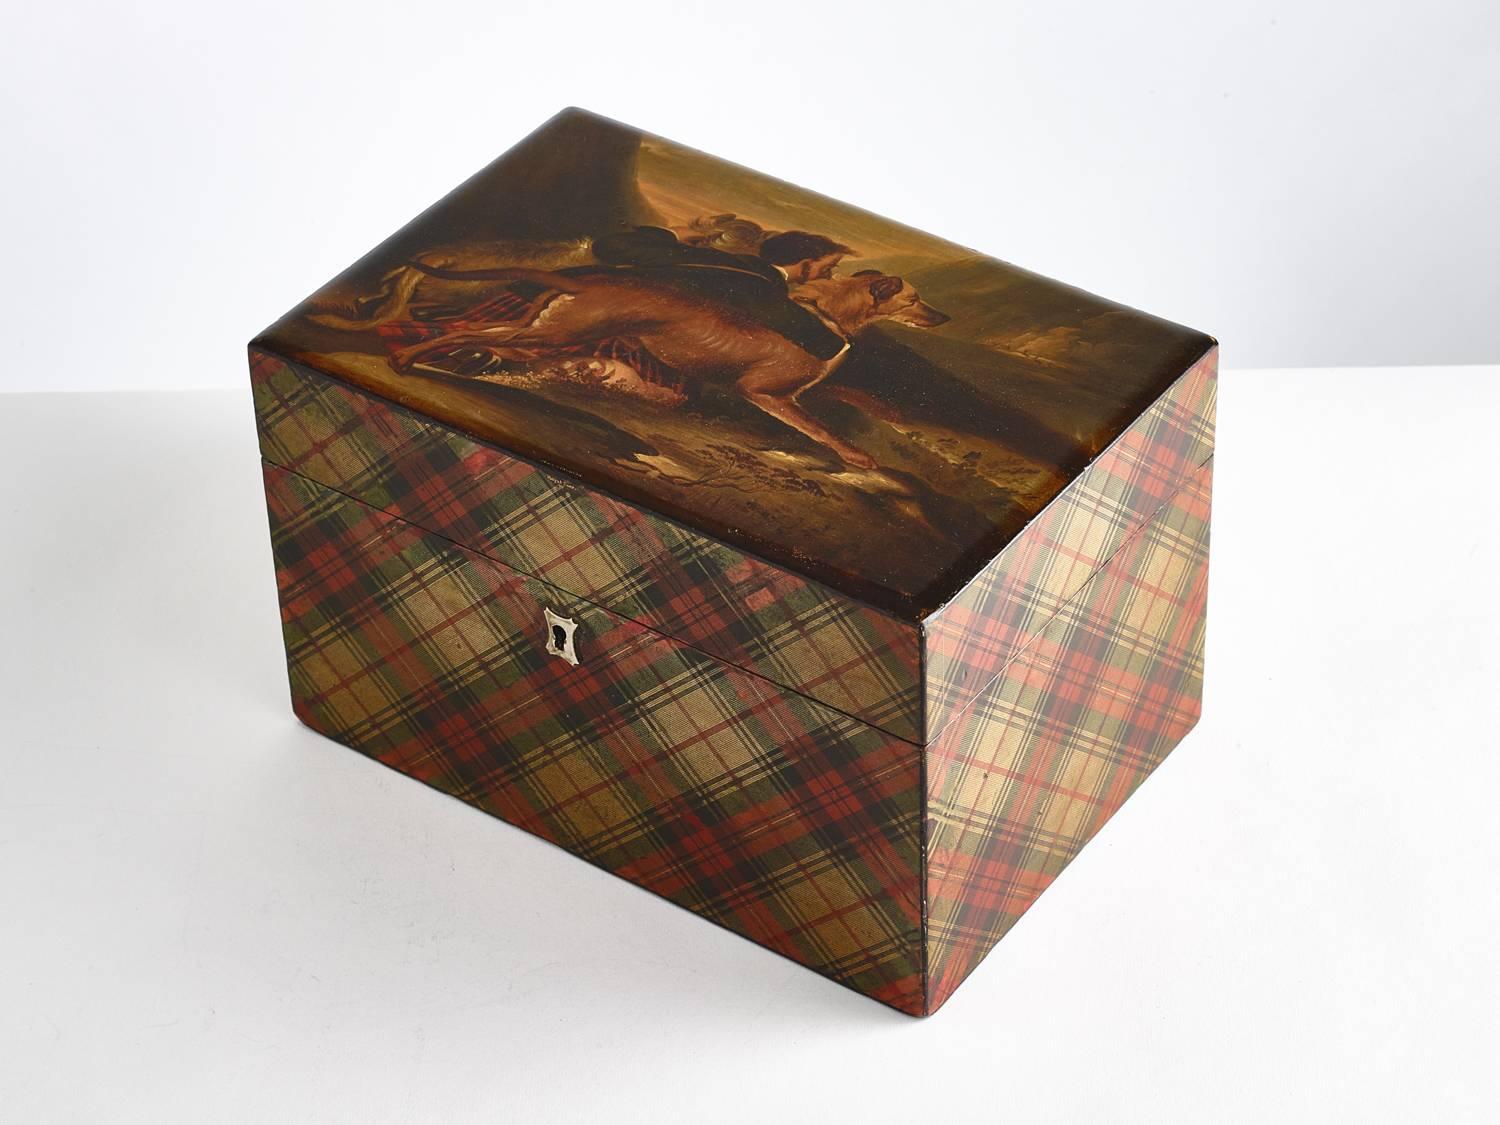 Painted Large Mid-19th Century Signed Royal Stuart Tartan Box, Circa 1830